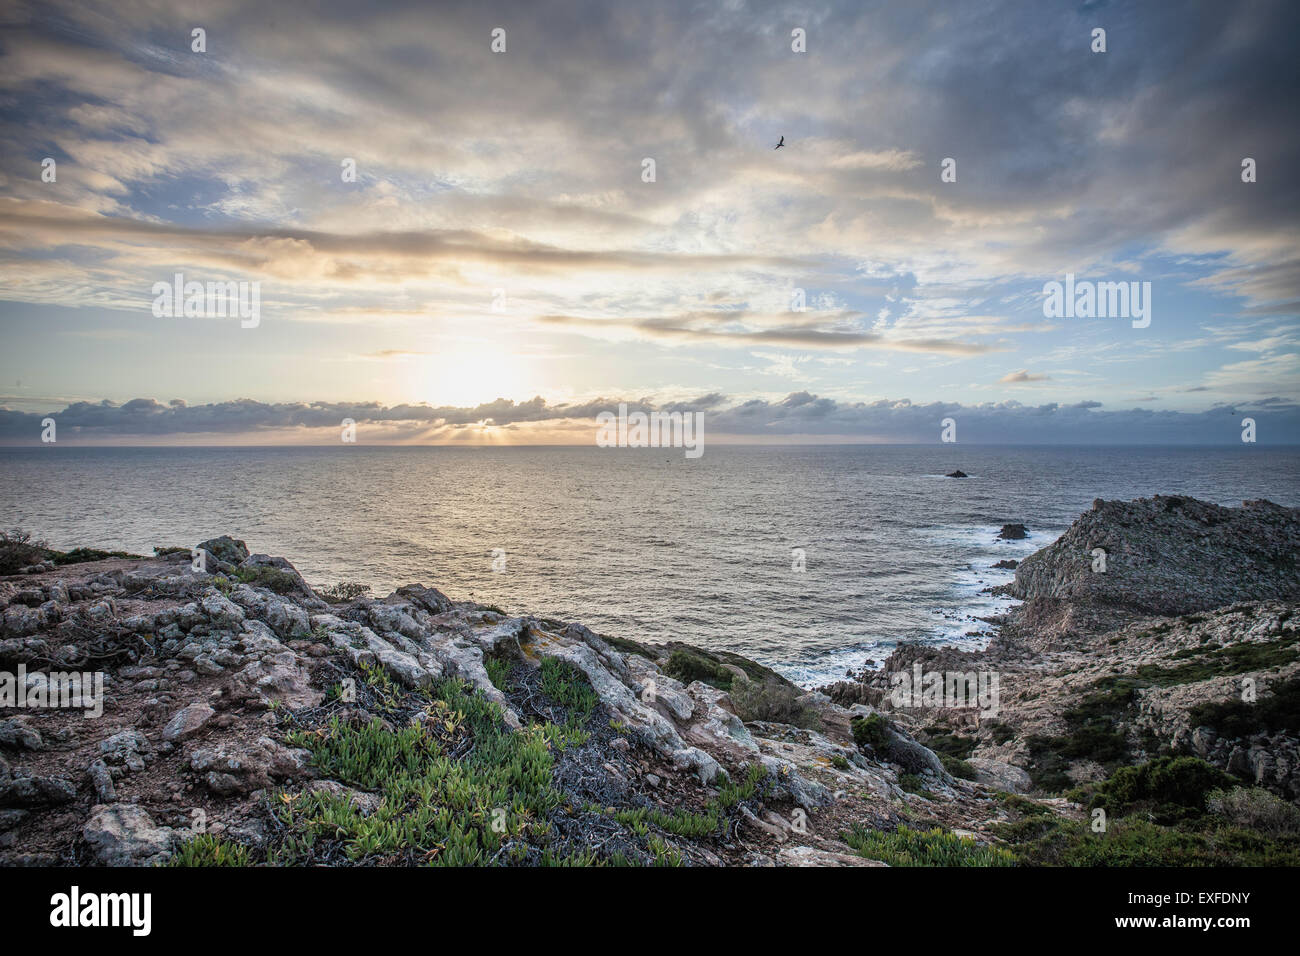 Coastal scene, Cagliari, Sardinia, Italy Stock Photo